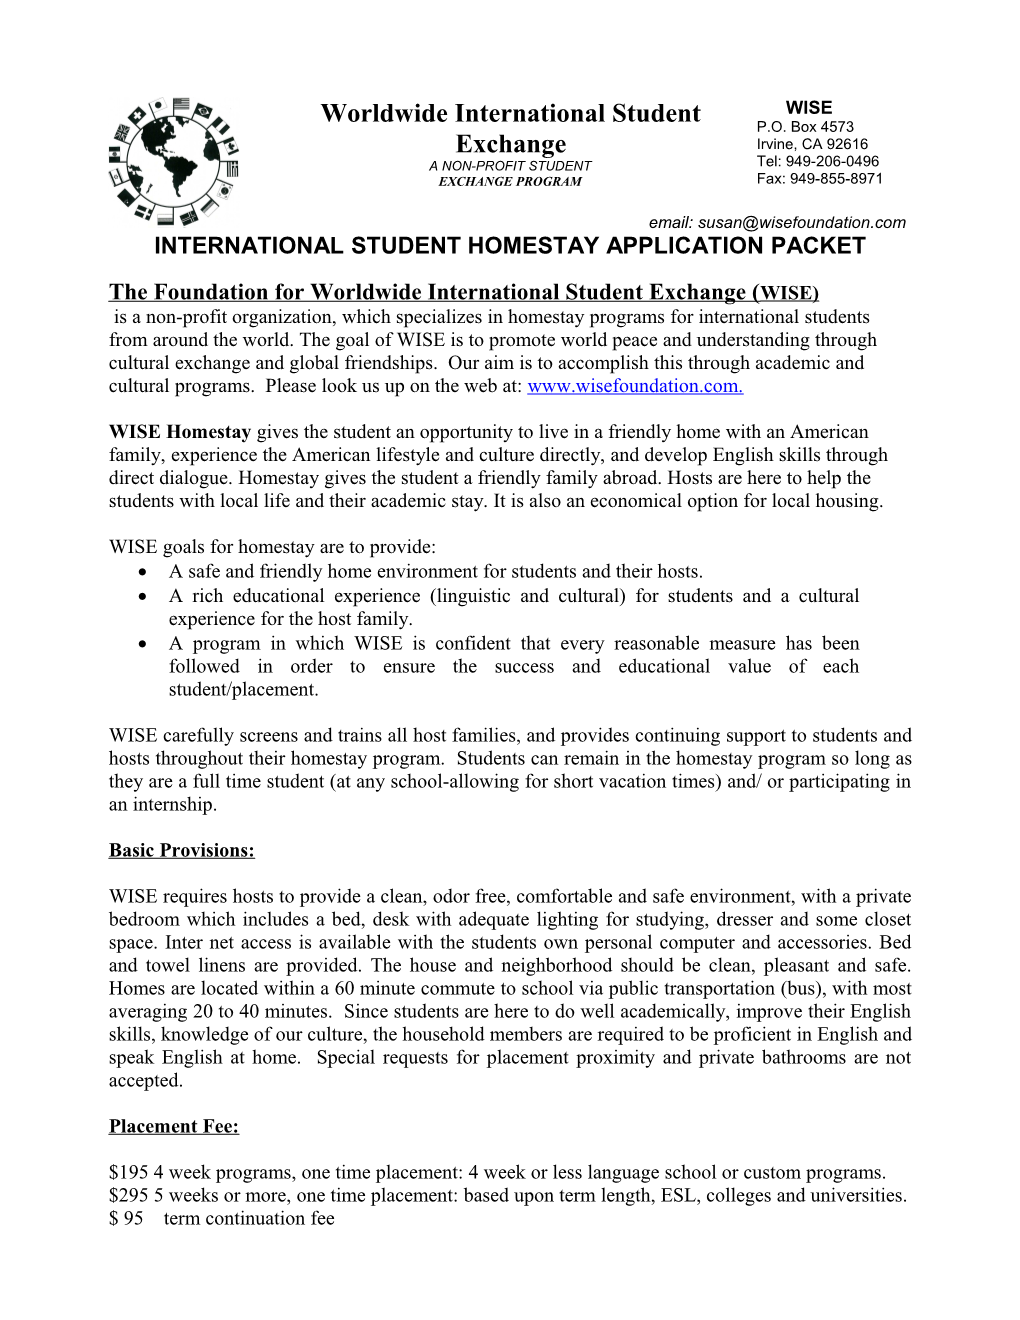 International Student Homestay Application Packet